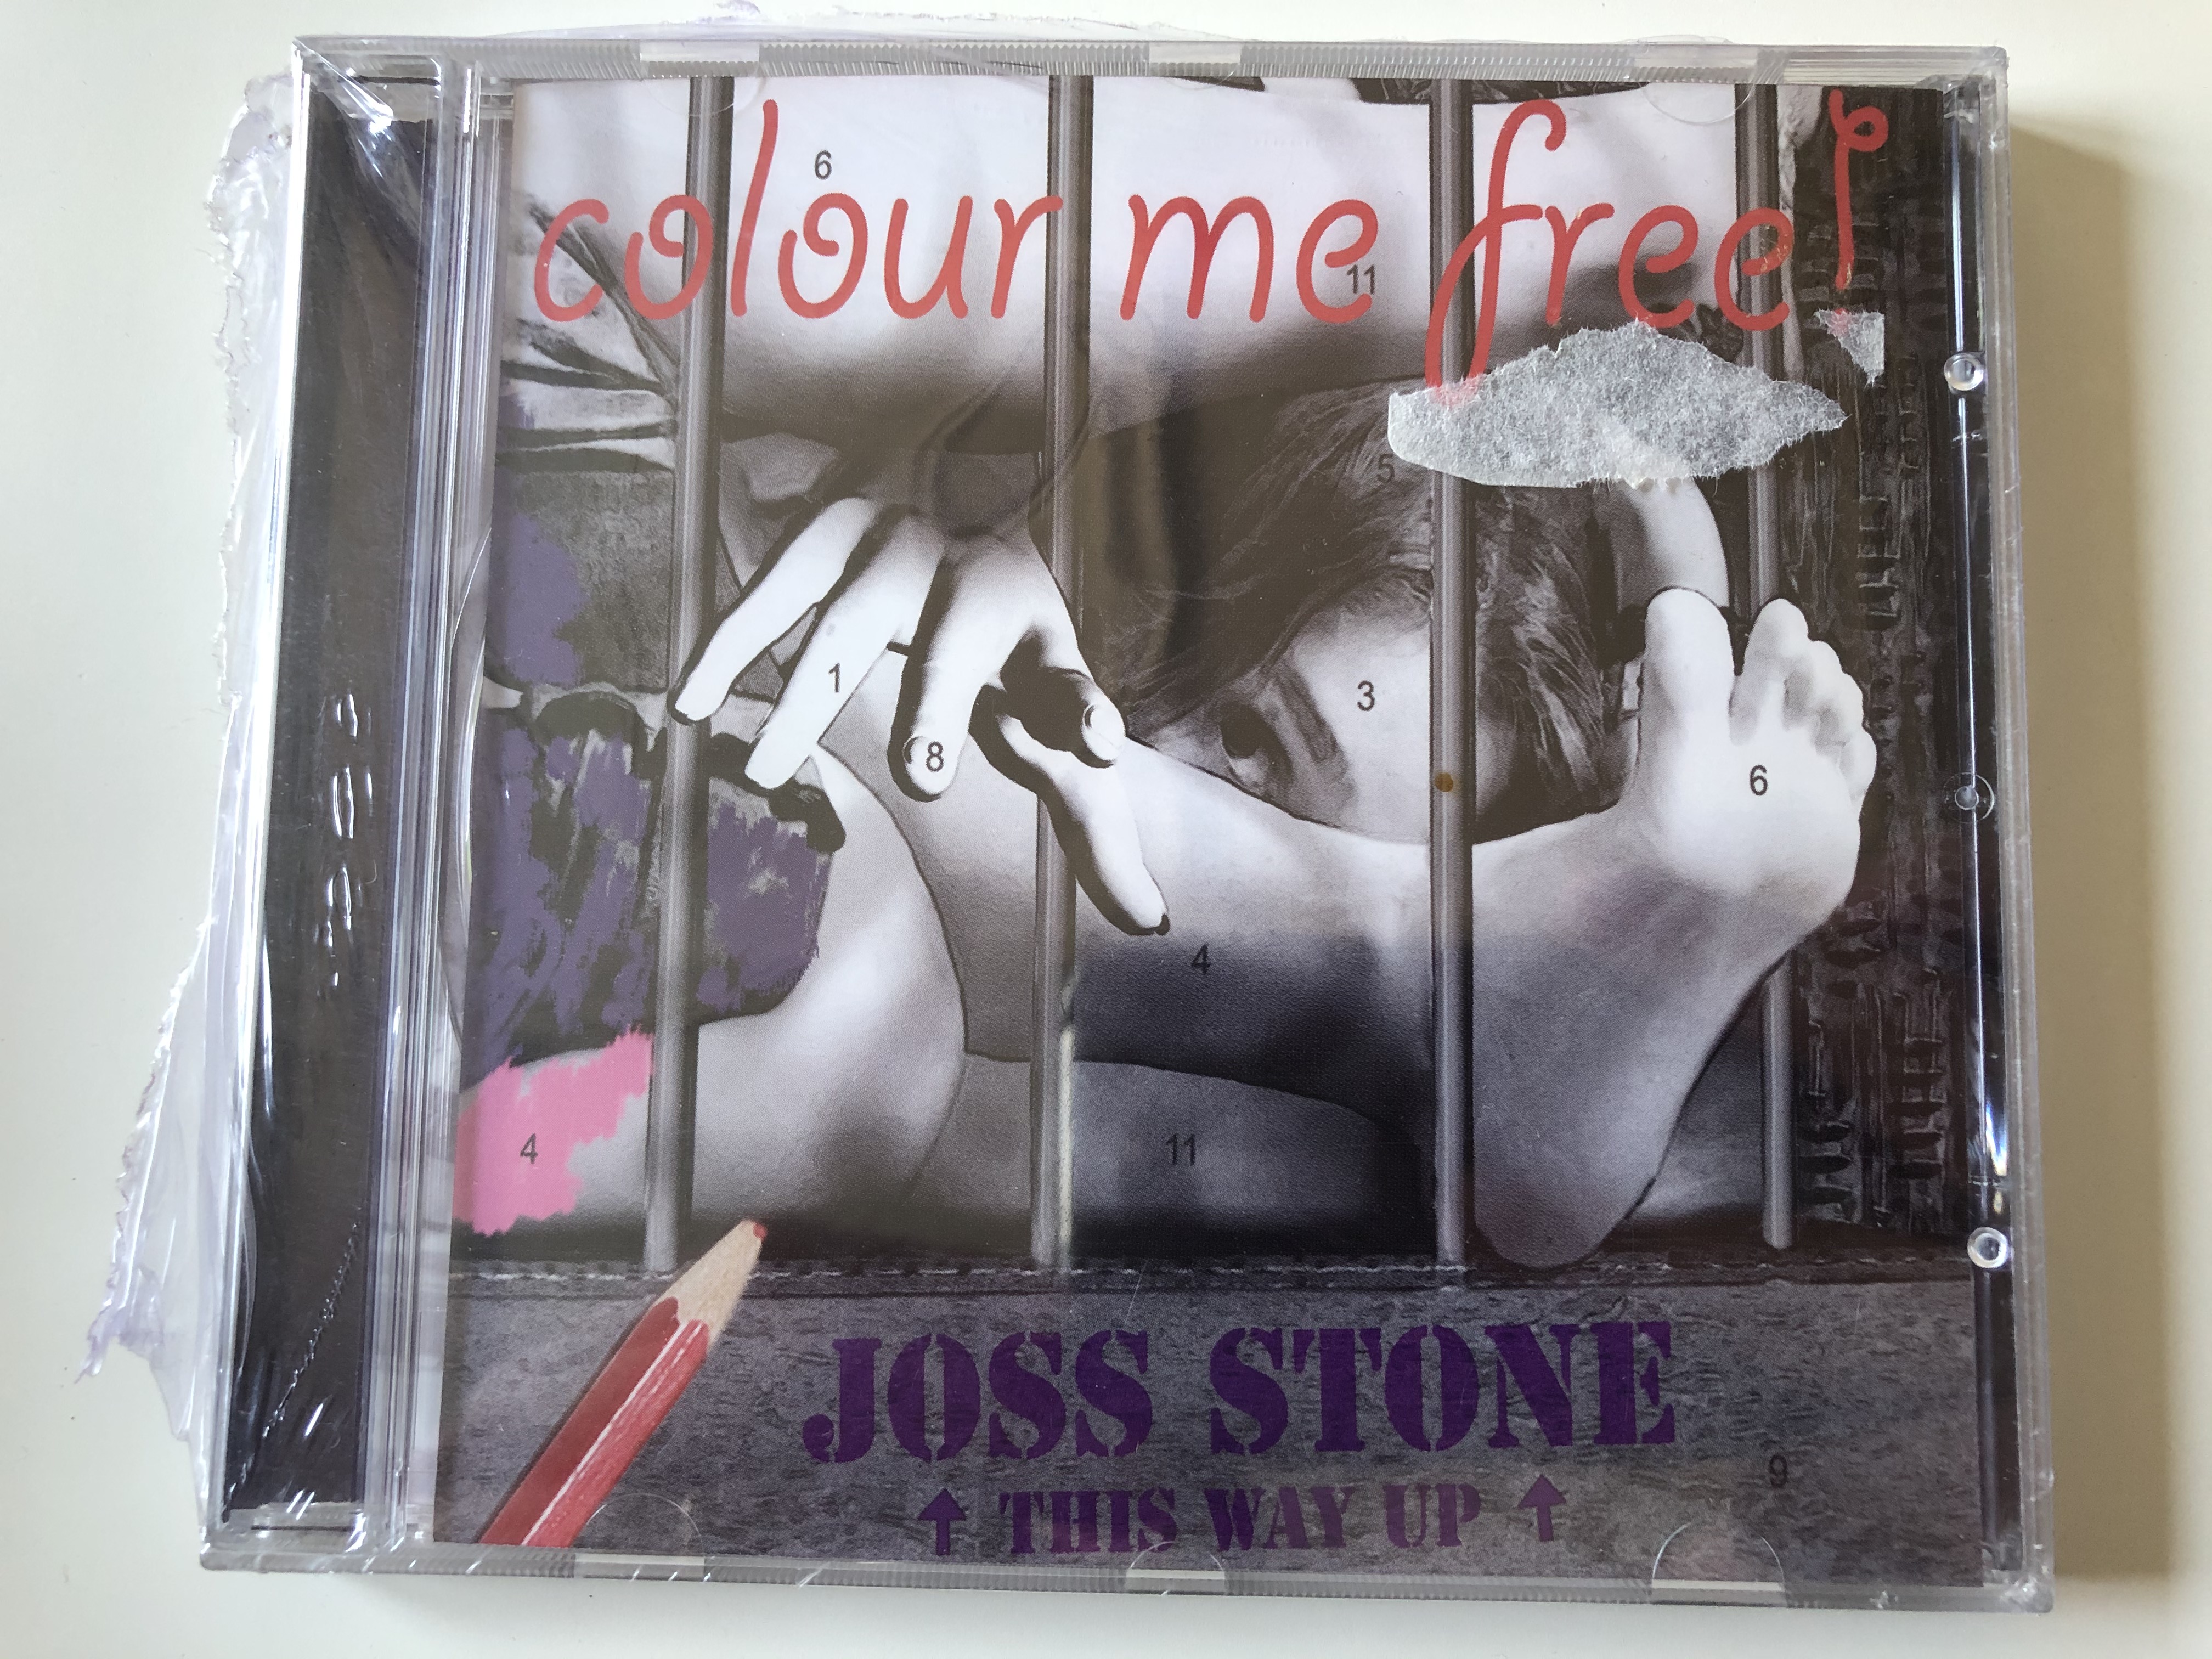 colour-me-free-joss-stone-this-way-up-virgin-audio-cd-2009-509994-56816-2-2-1-.jpg